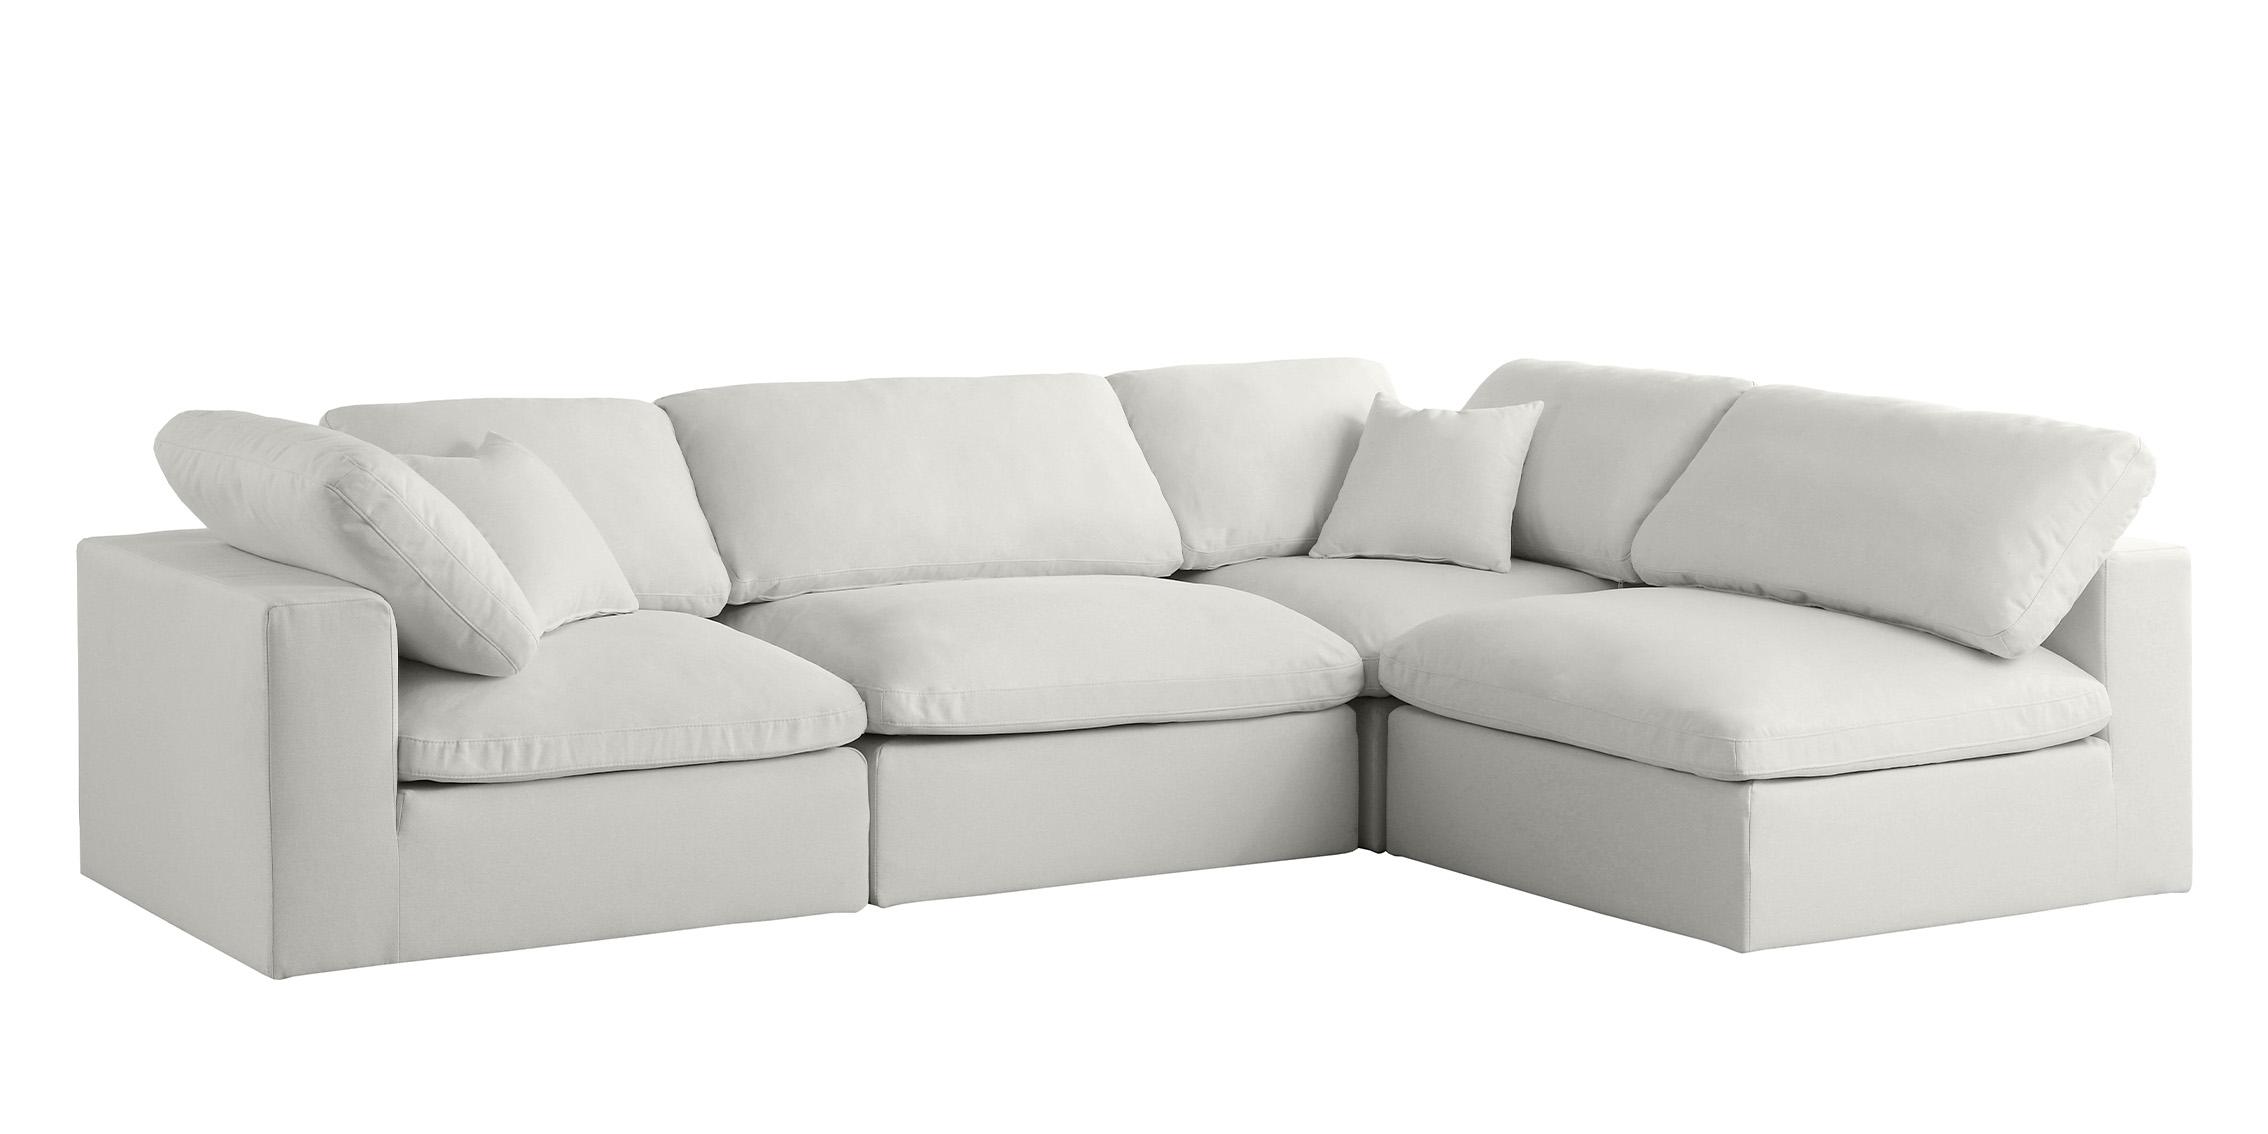 Contemporary, Modern Sectional Sofa 602Cream-Sec4B 602Cream-Sec4B in Cream Fabric